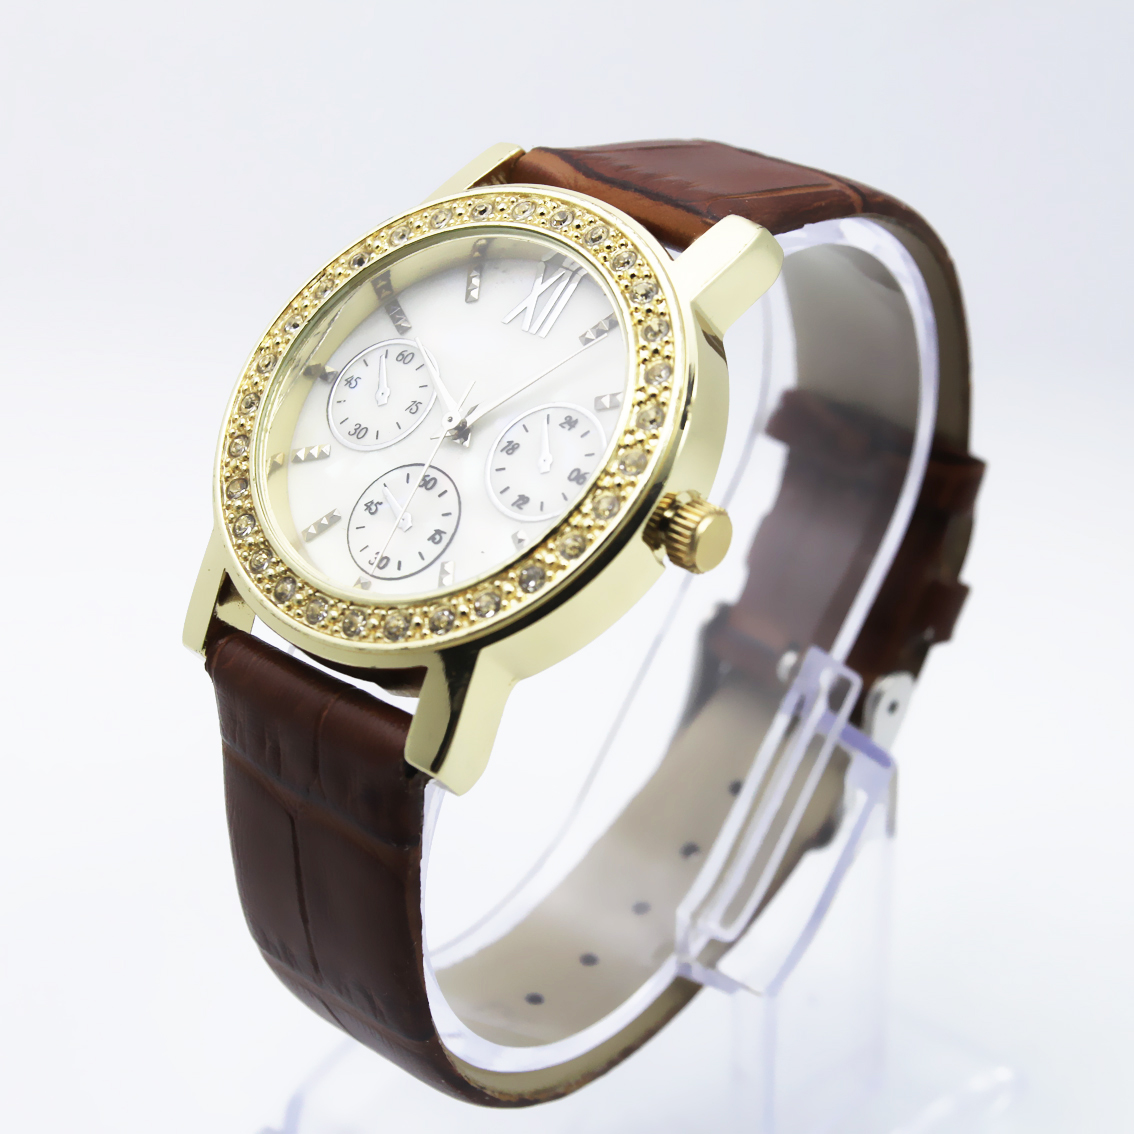 #02046Men's wristwatch quartz analog leather strap watch